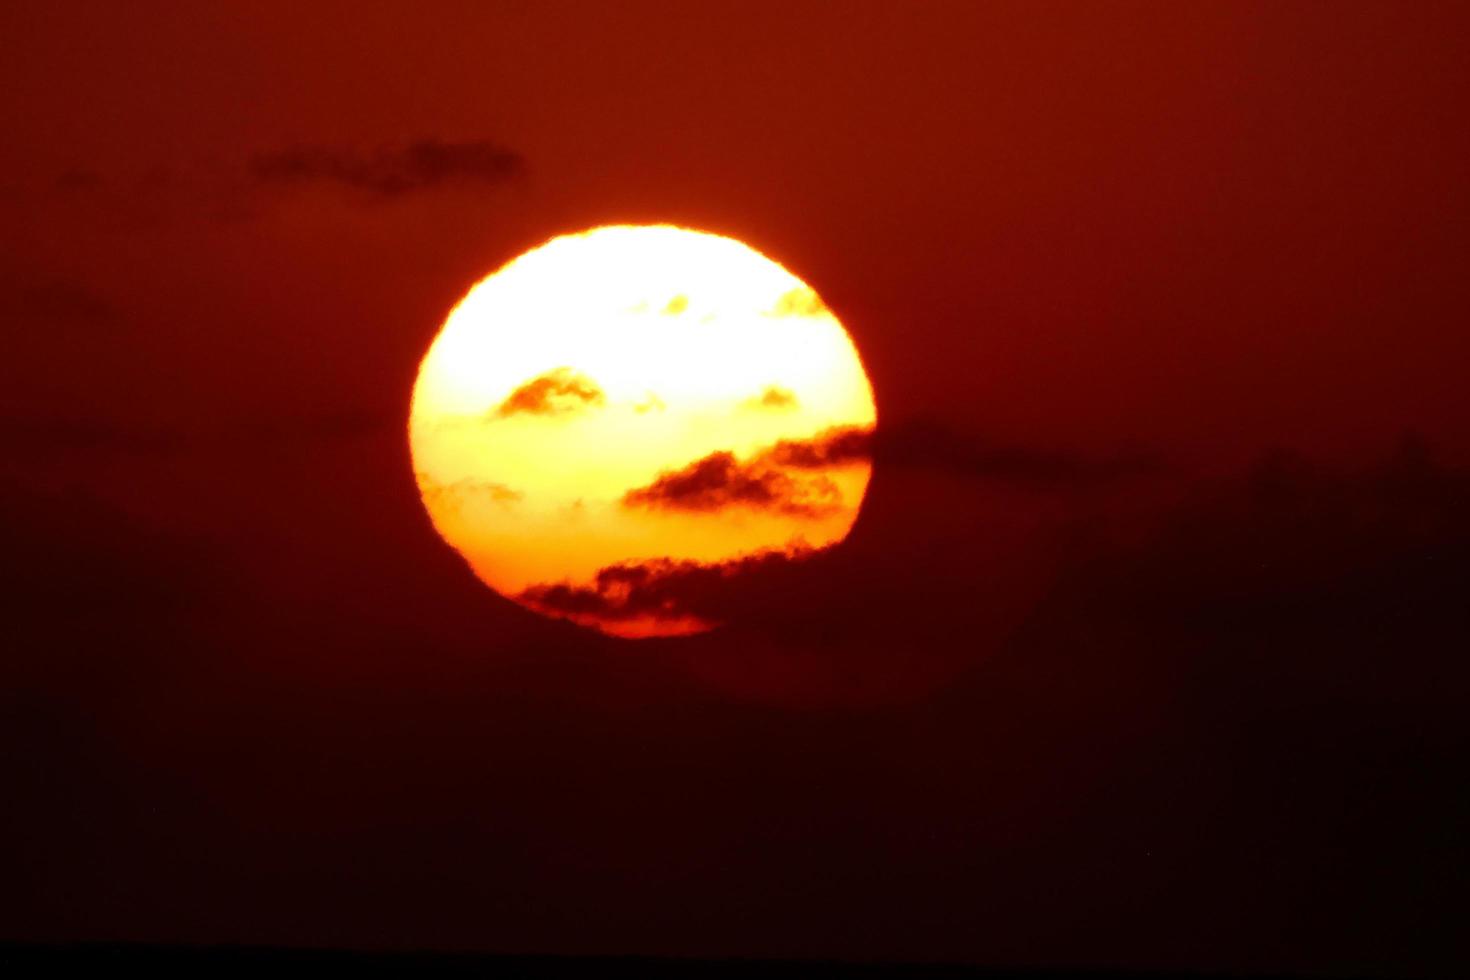 Sun disk rising over the horizon of the sea, sunrise, dawn photo